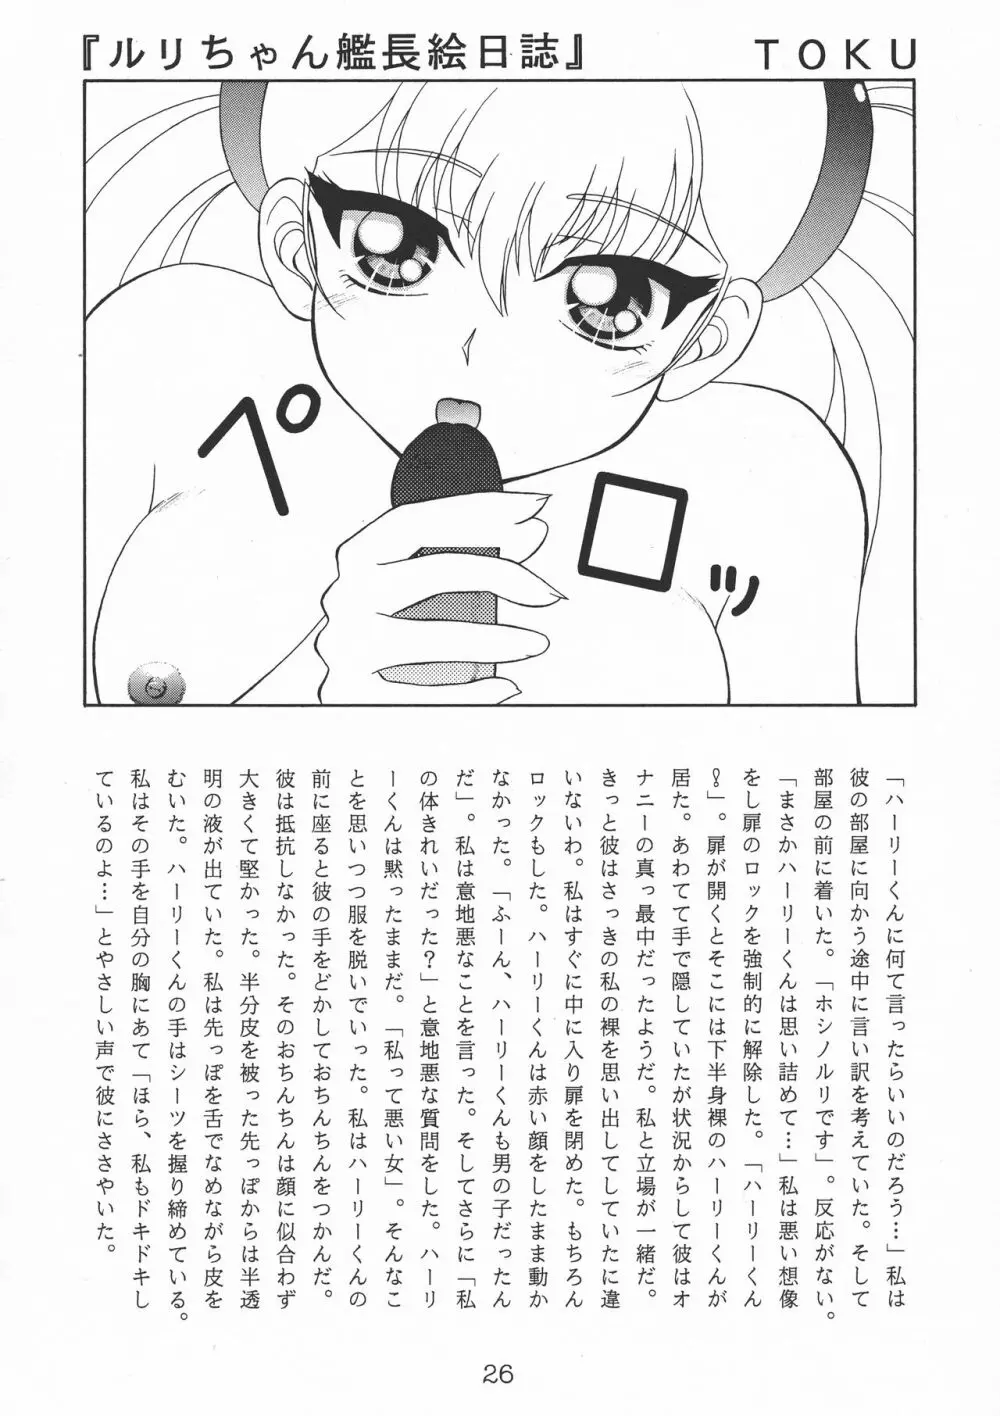 TOKUTEI 7 - page26